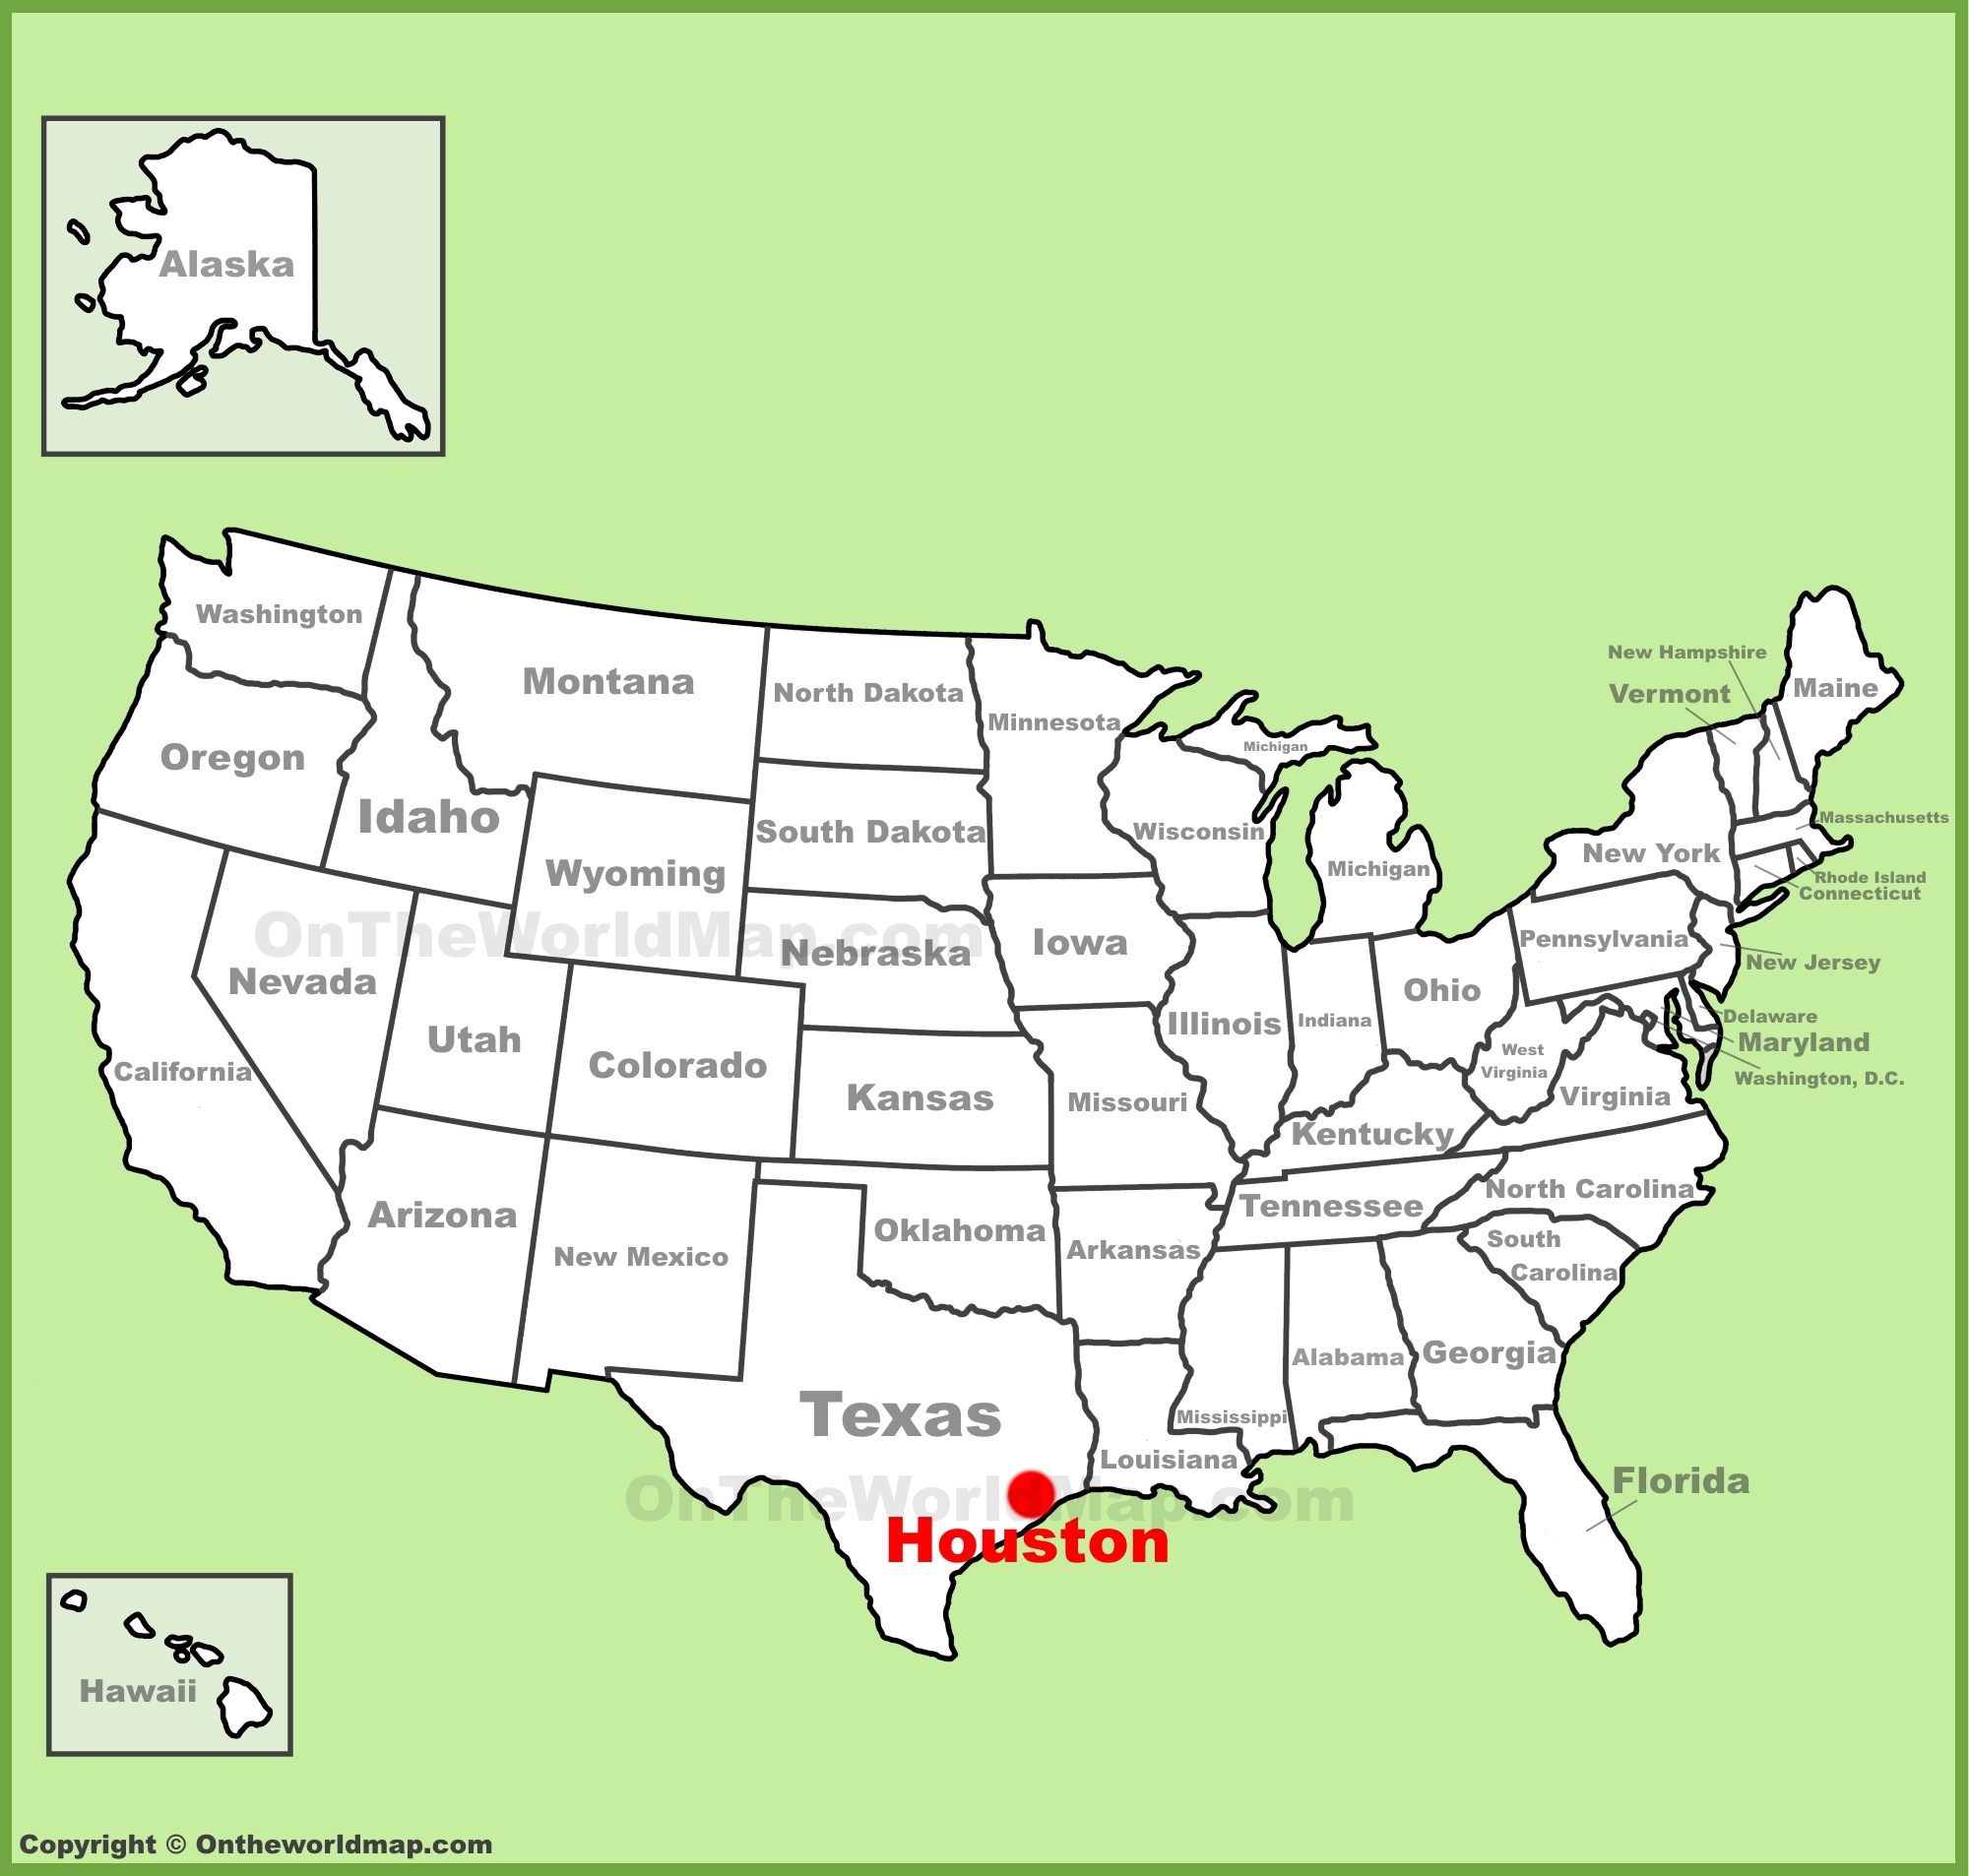 Houston Location On The U S Map